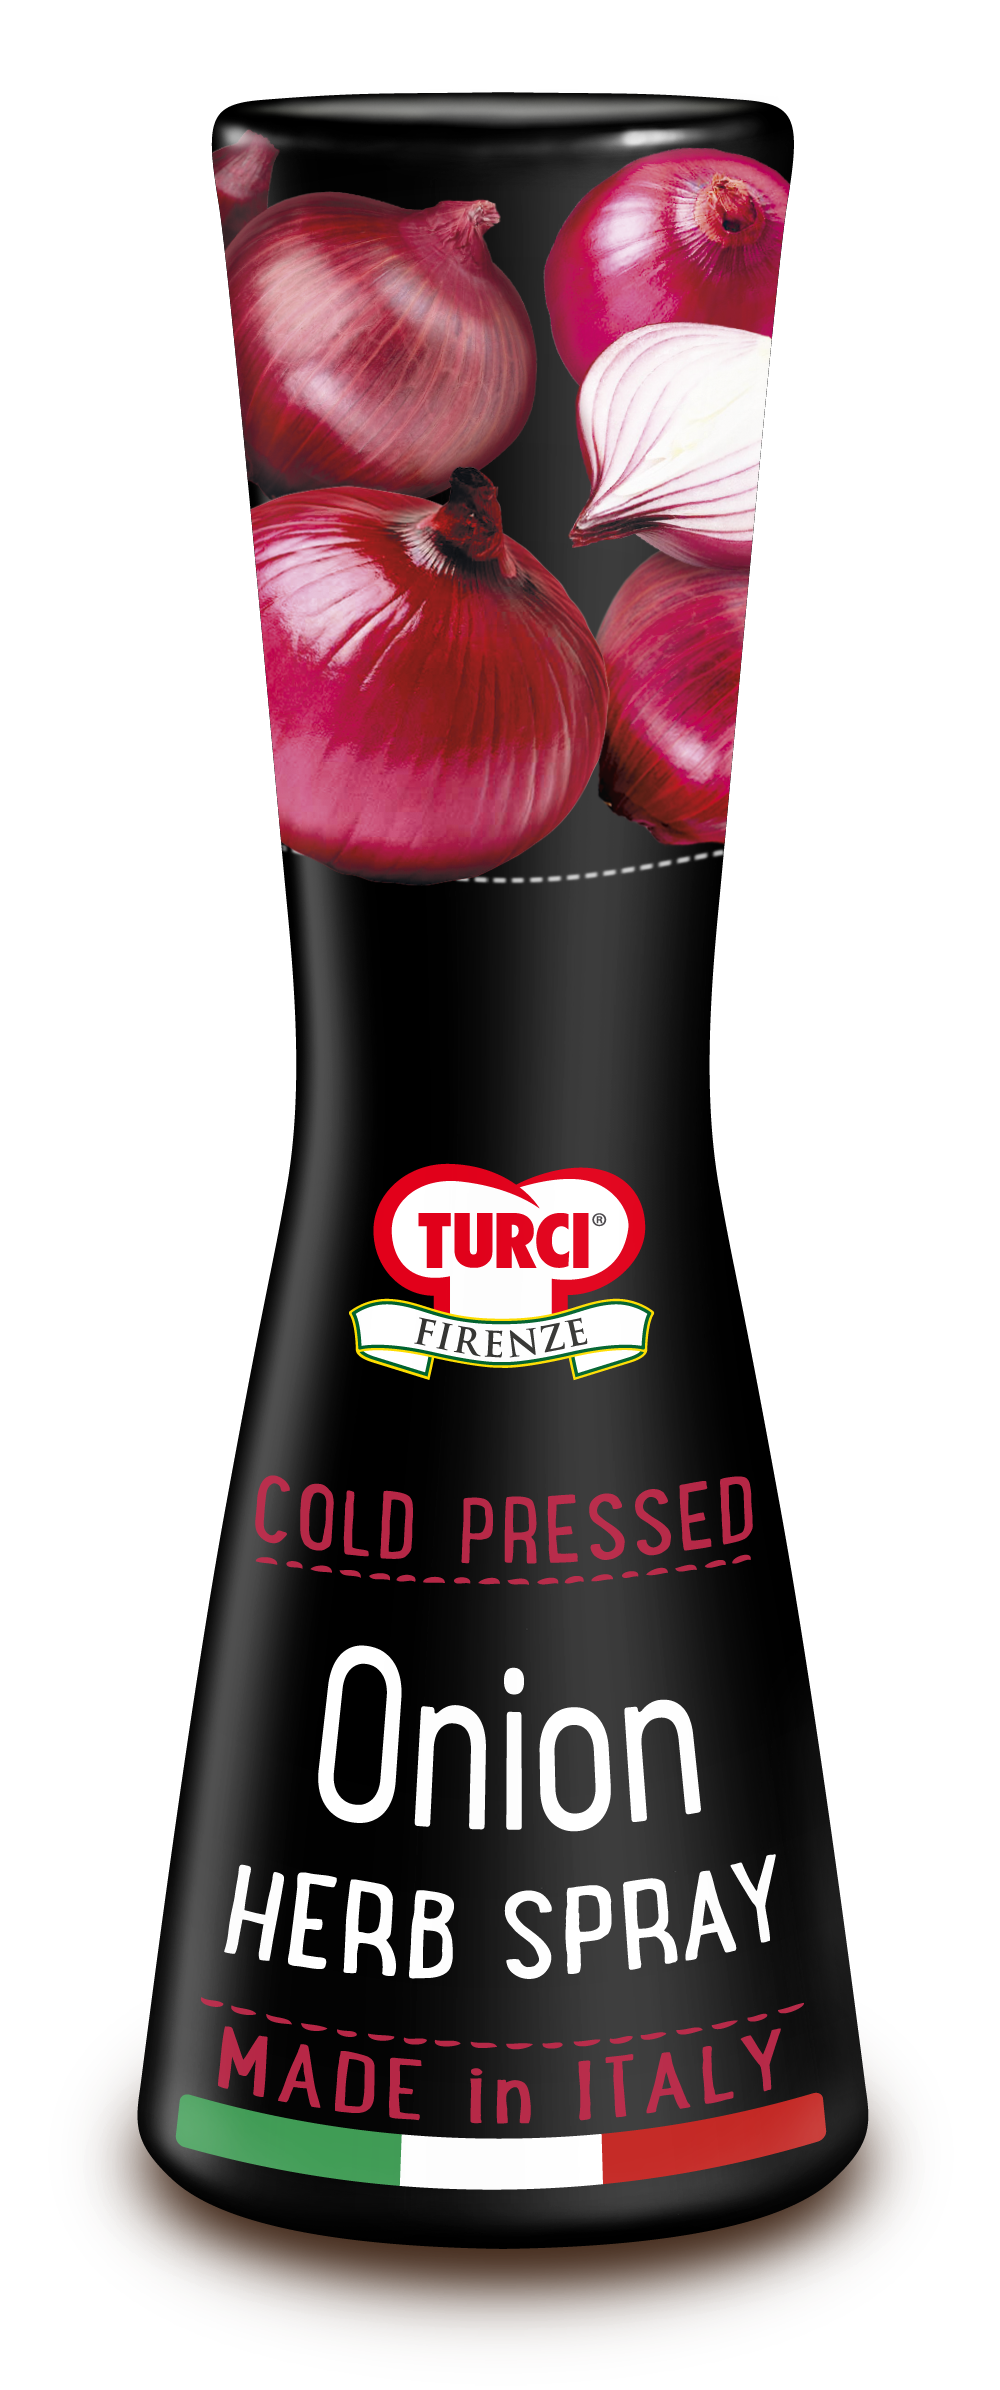 Spray de Cebolla Turci, 40ml